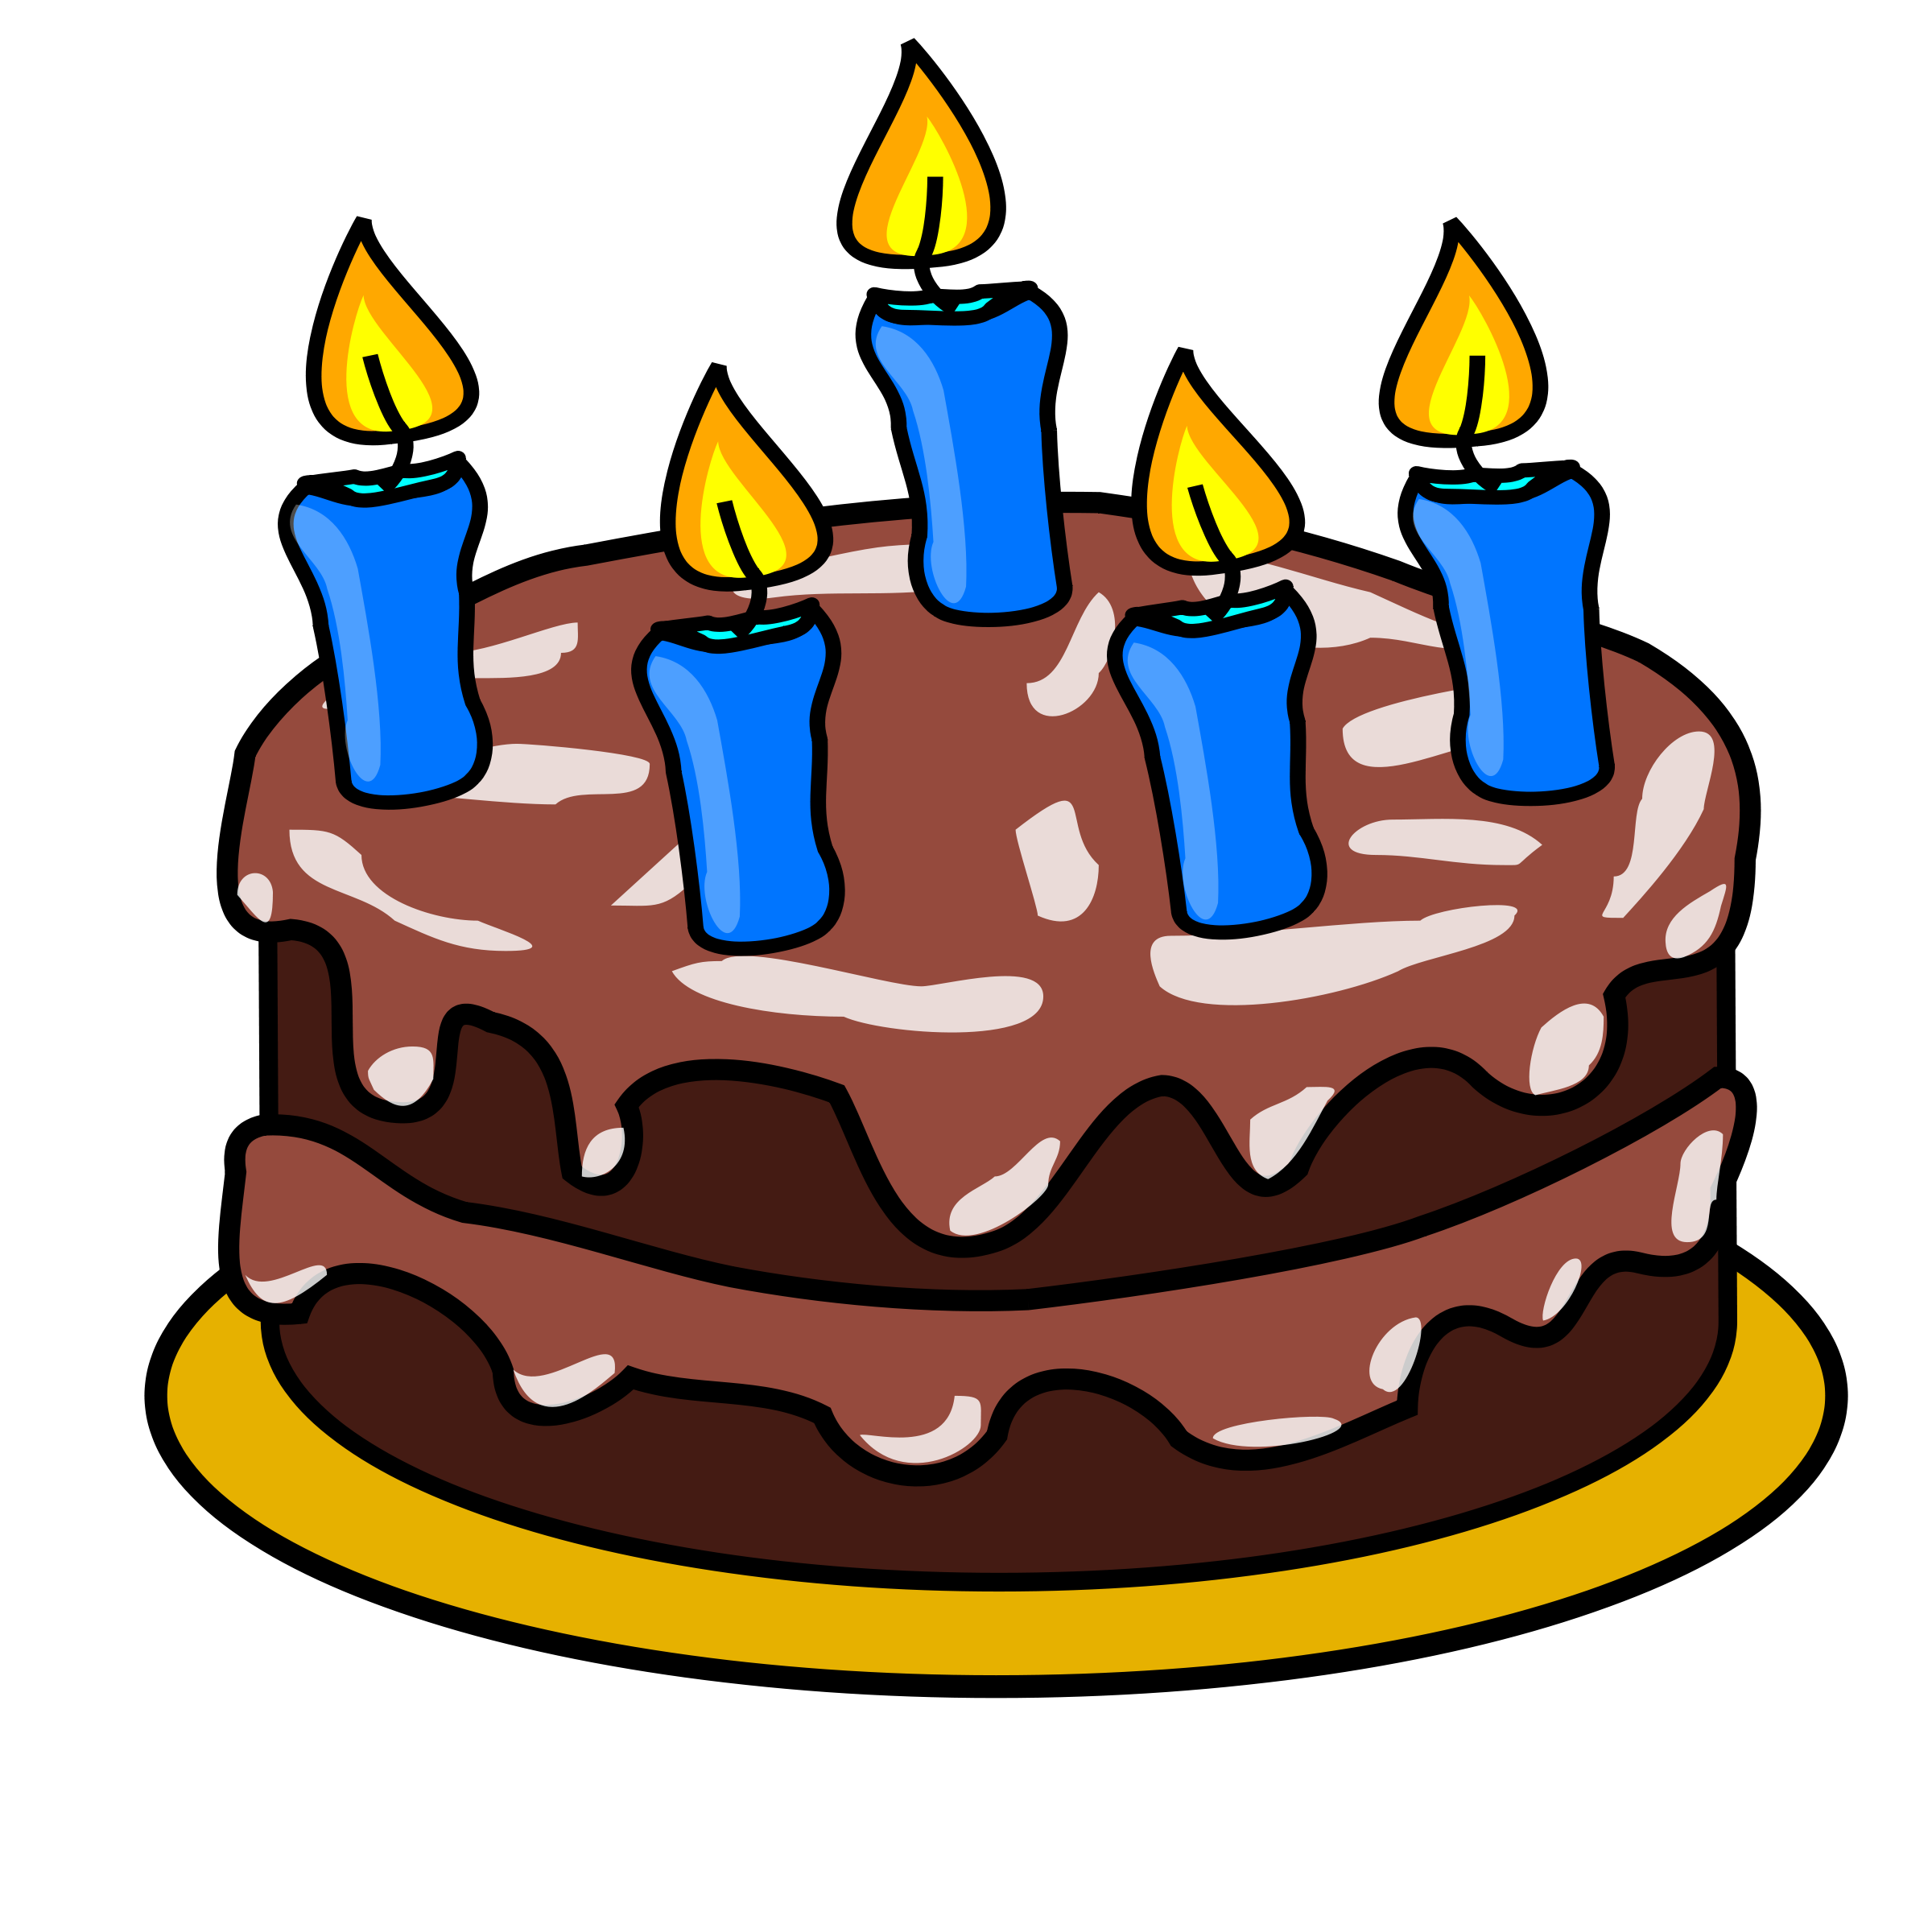 Free Birthday Cake Clip Art_free Birthday Cake Clip Art Clipart Of Cakesbirthday Cake Clipart Clipart Panda Free Clipart Images Ozv4zl5k